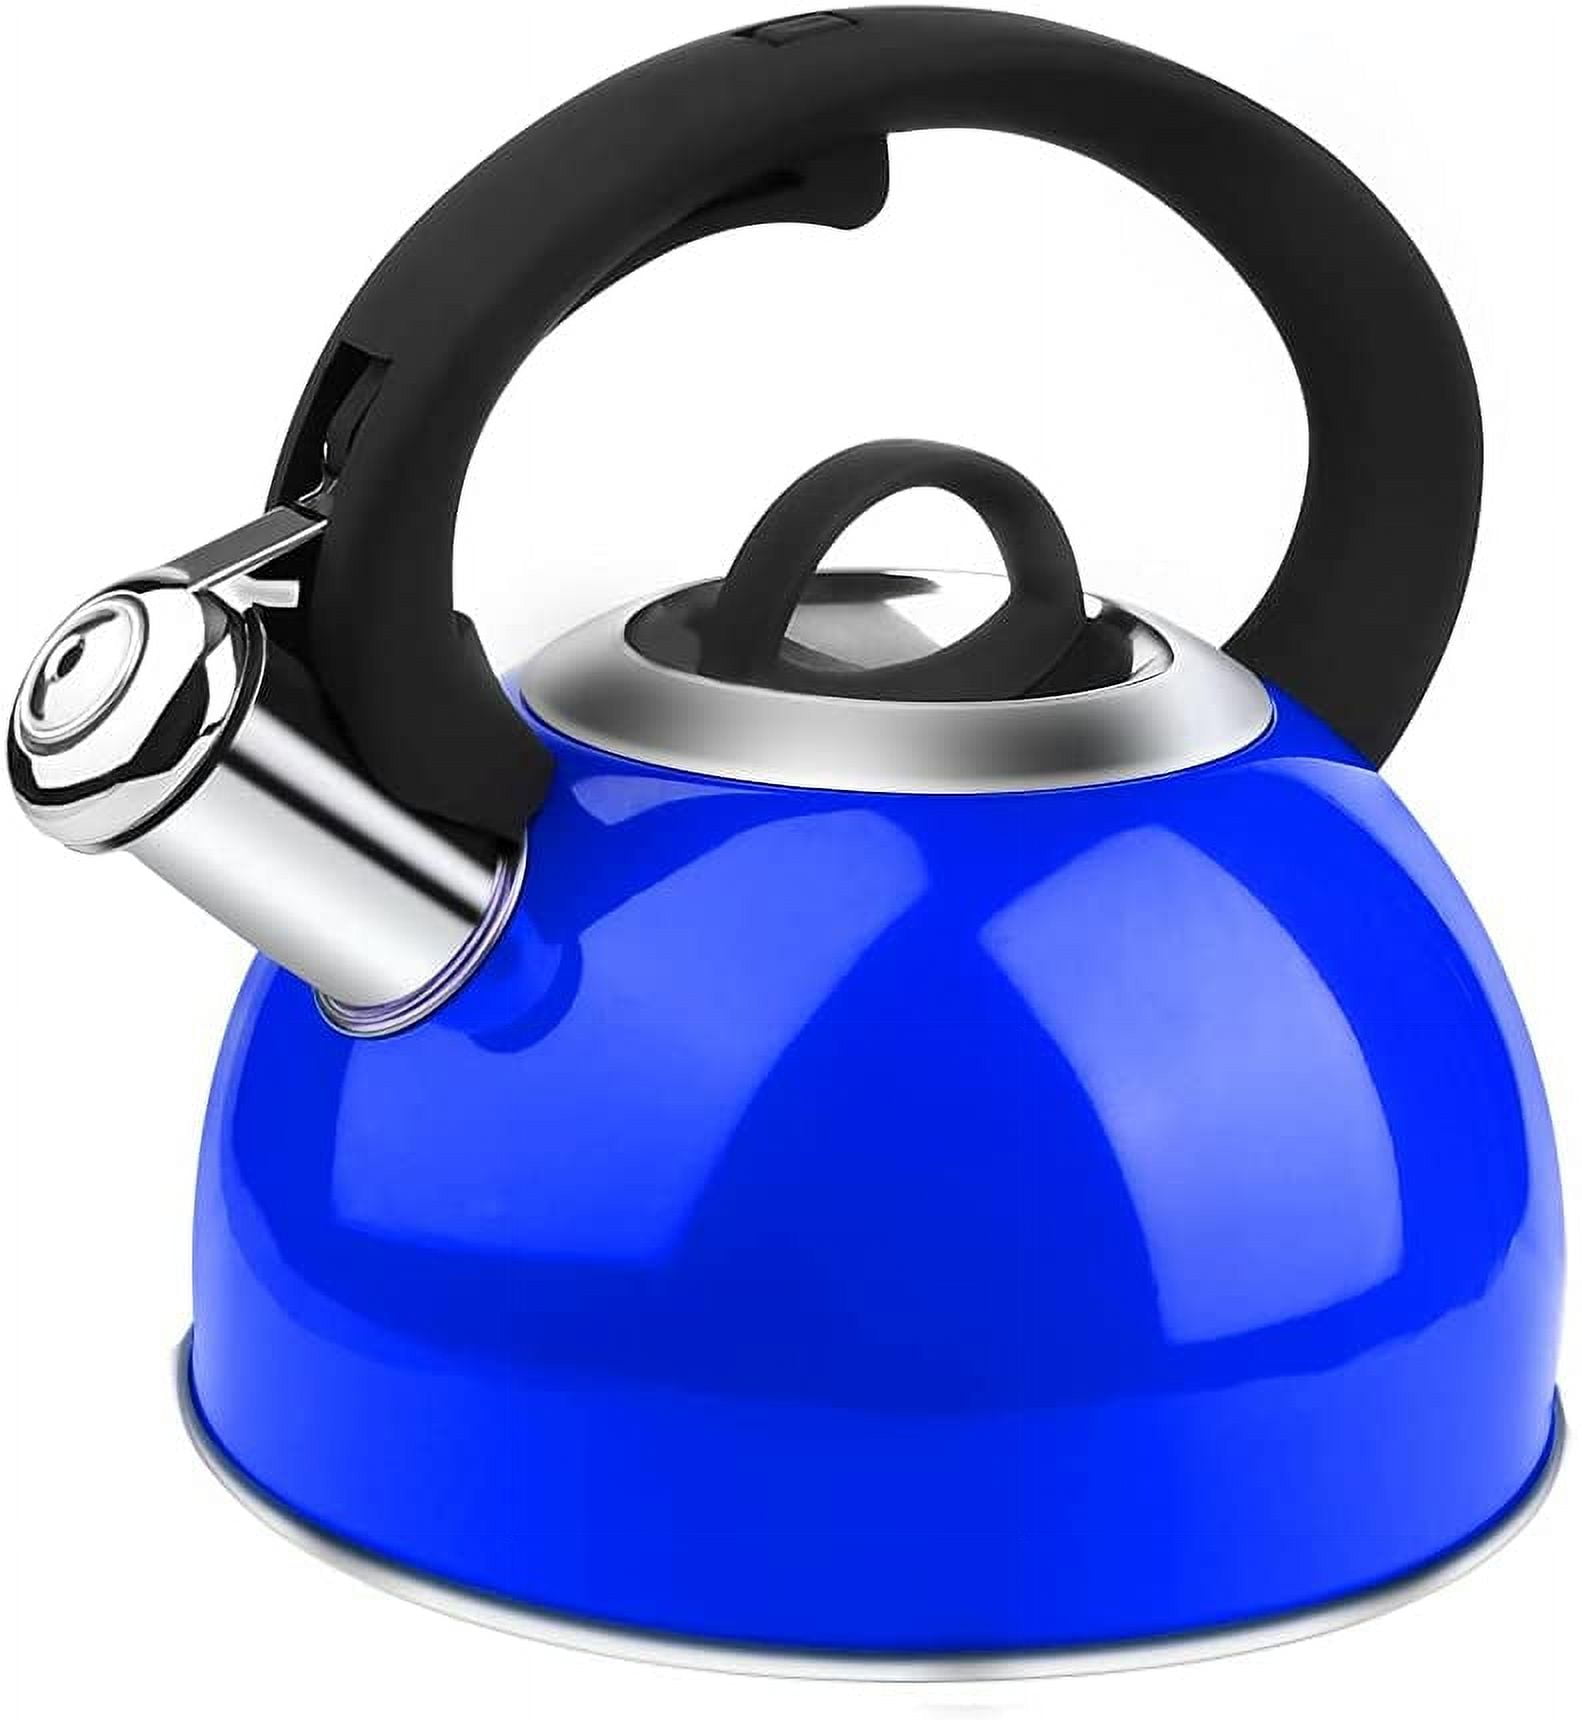 KitchenAid 2 Quart Black Enamel Whistling Teapot Tea Kettle Squeeze ROYAL  BLUE!